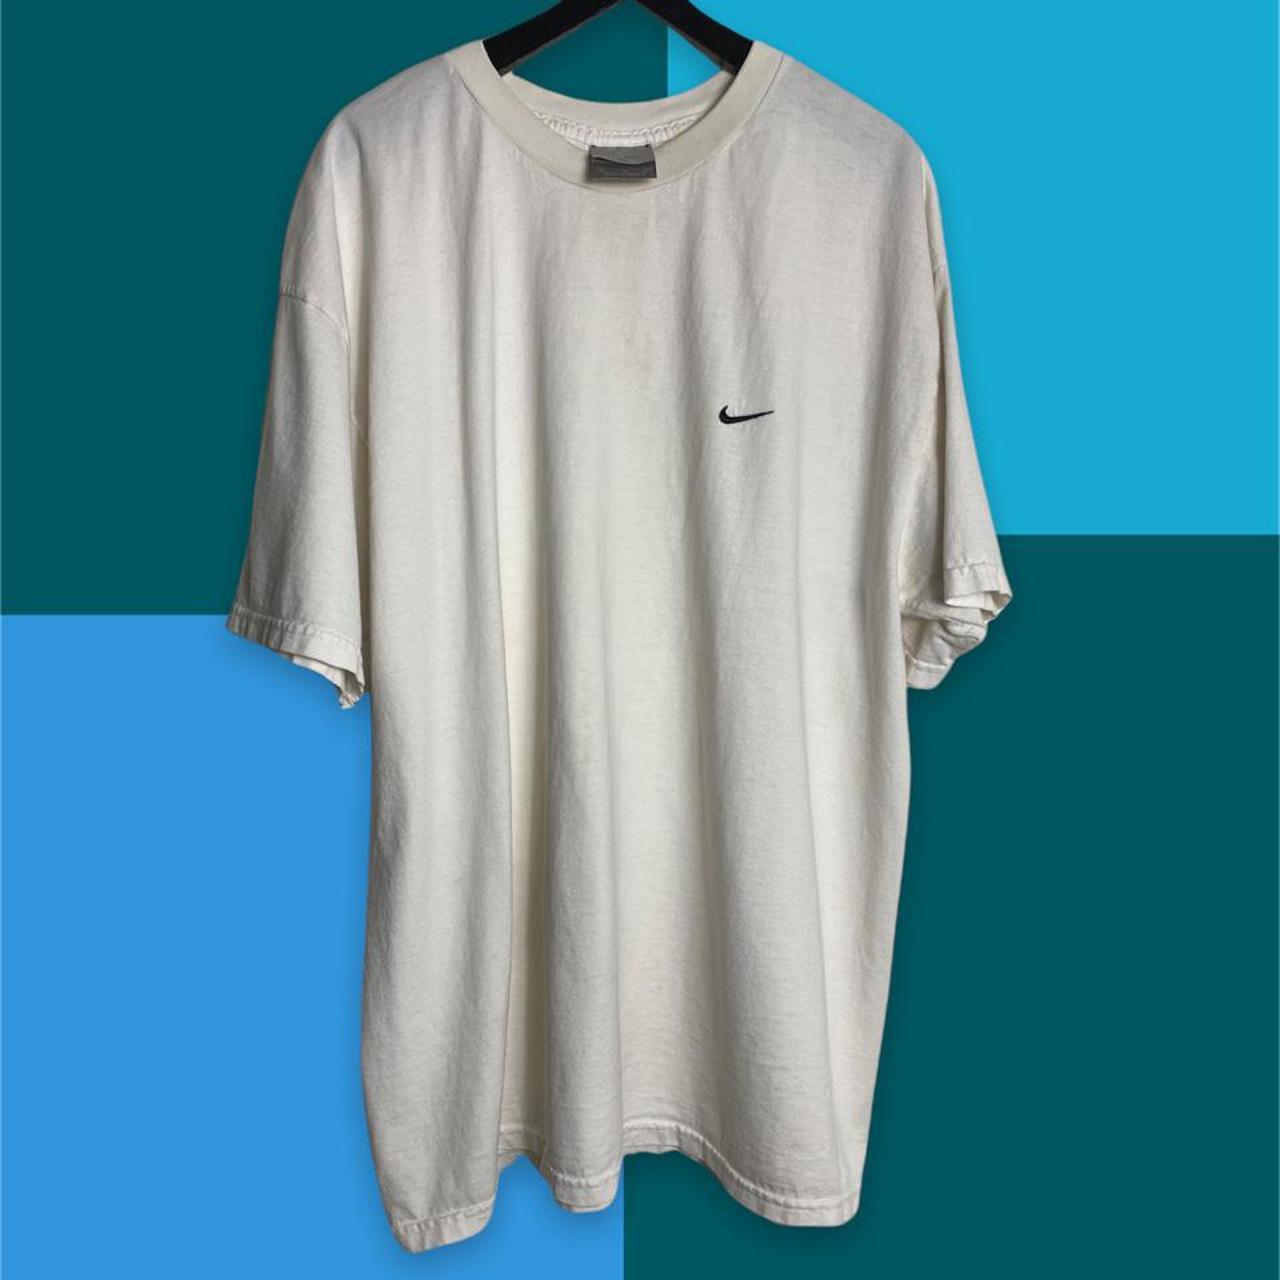 Nike Men's White T-shirt